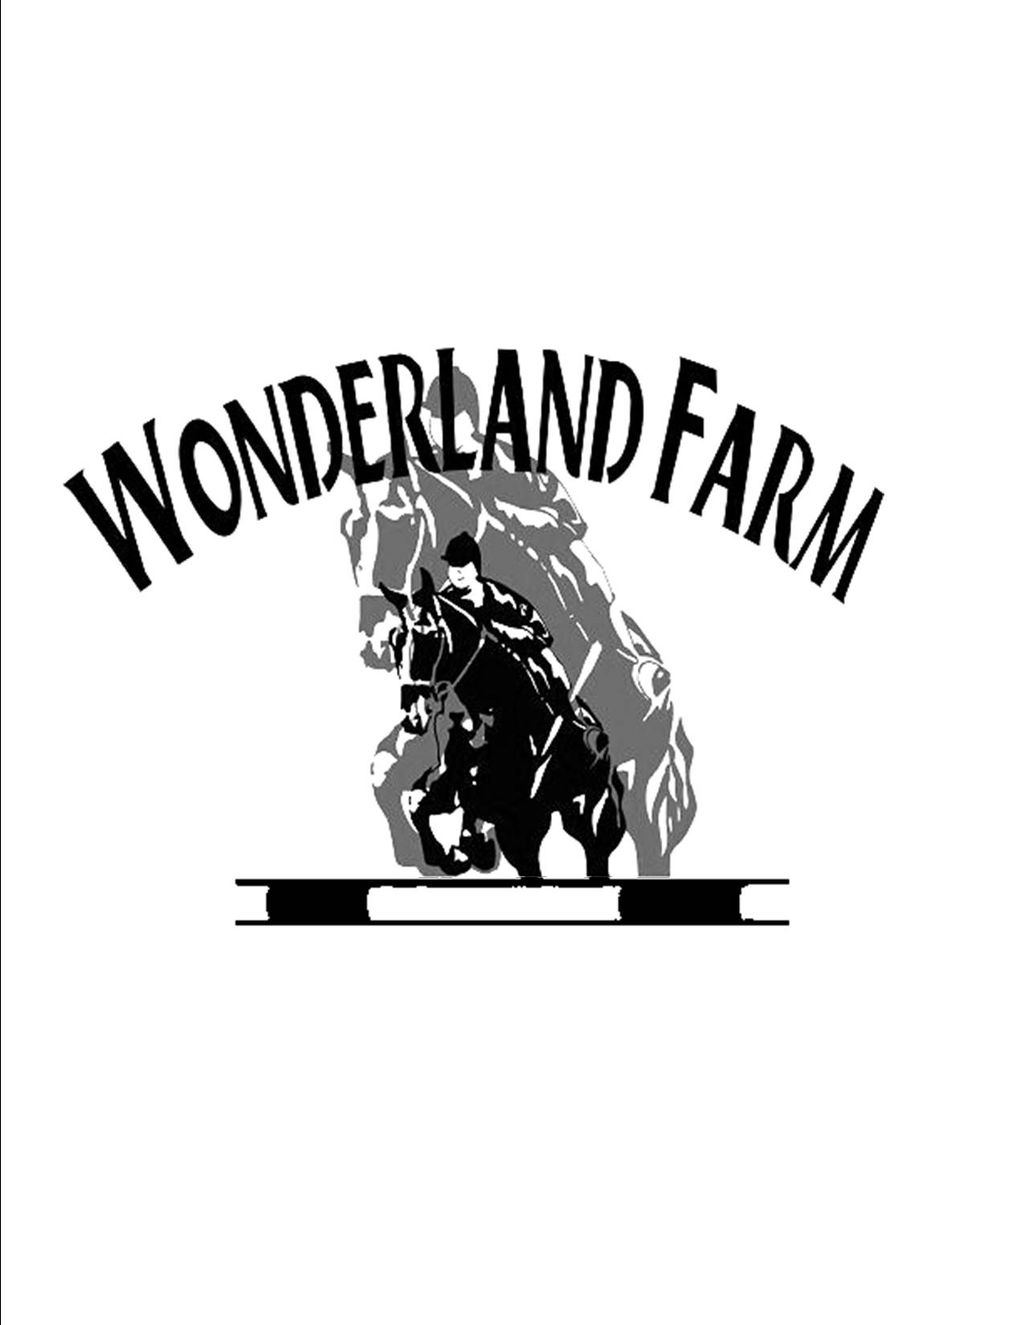 Wonderland Farm